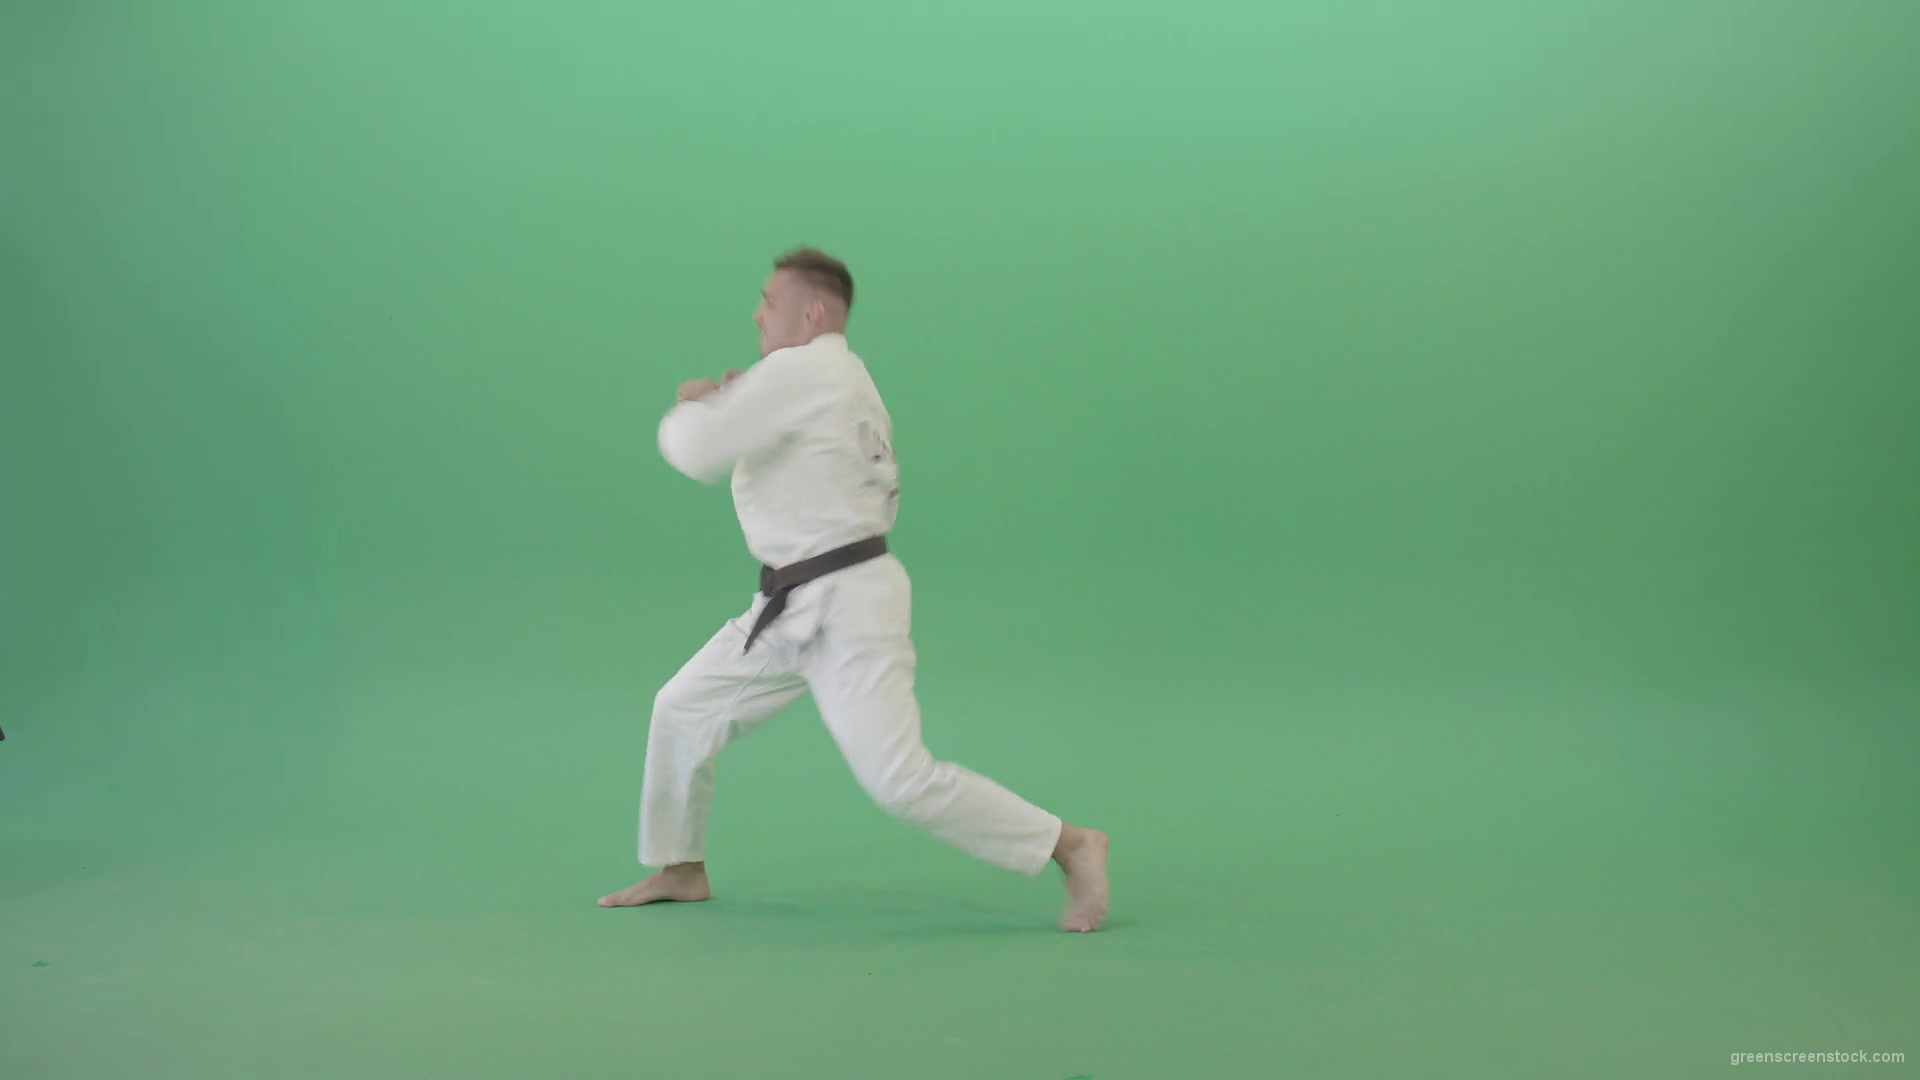 Karate-Sport-man-make-side-kick-isolated-on-green-screen-4K-Video-Footage-1920_005 Green Screen Stock